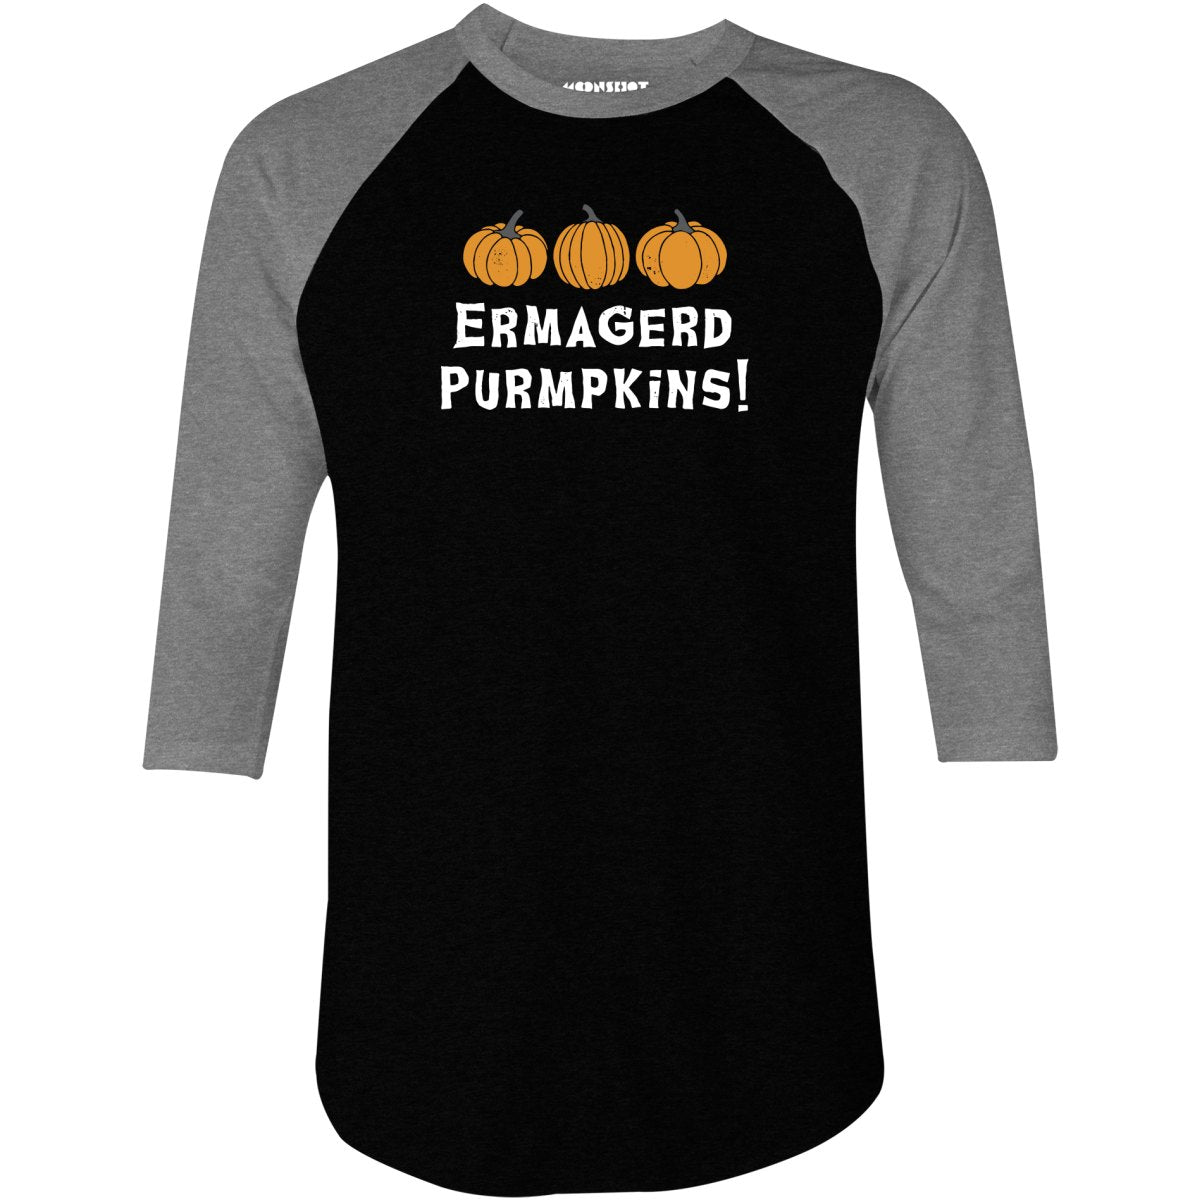 Ermagerd Purmpkins! - 3/4 Sleeve Raglan T-Shirt